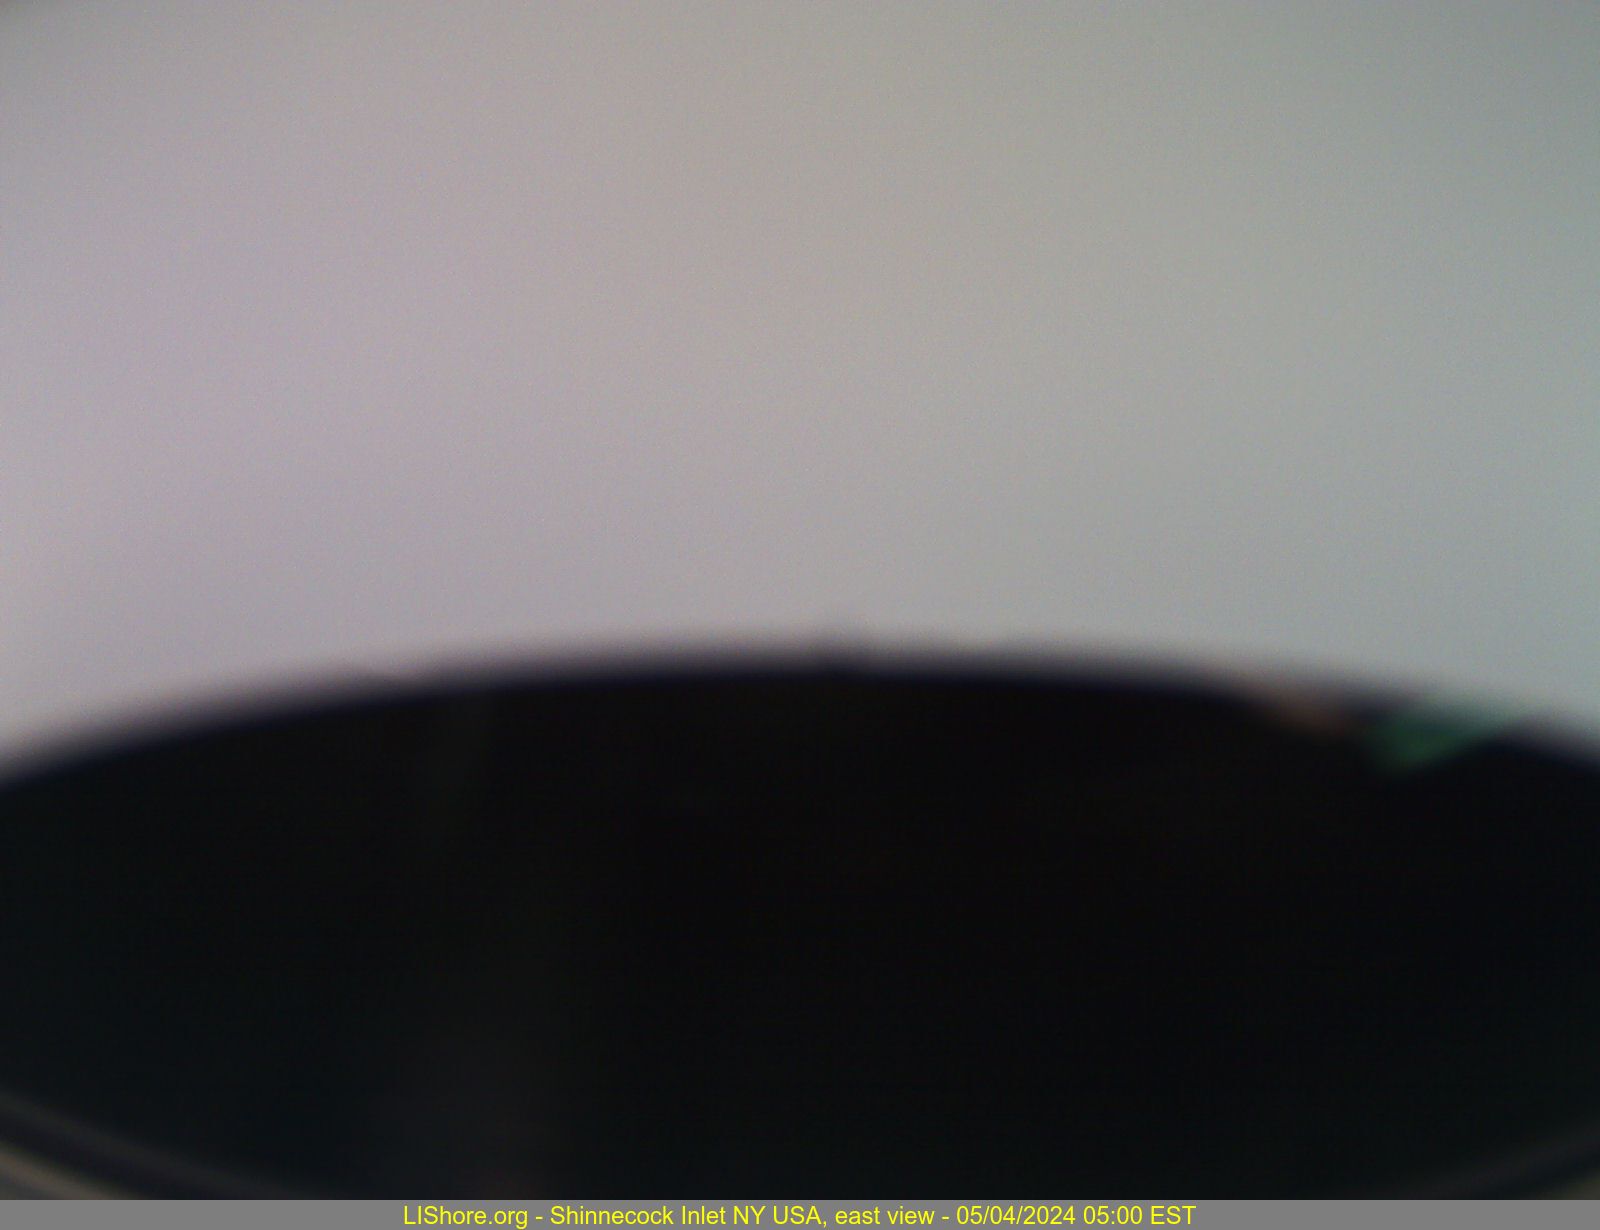 Webcam image - northeast view